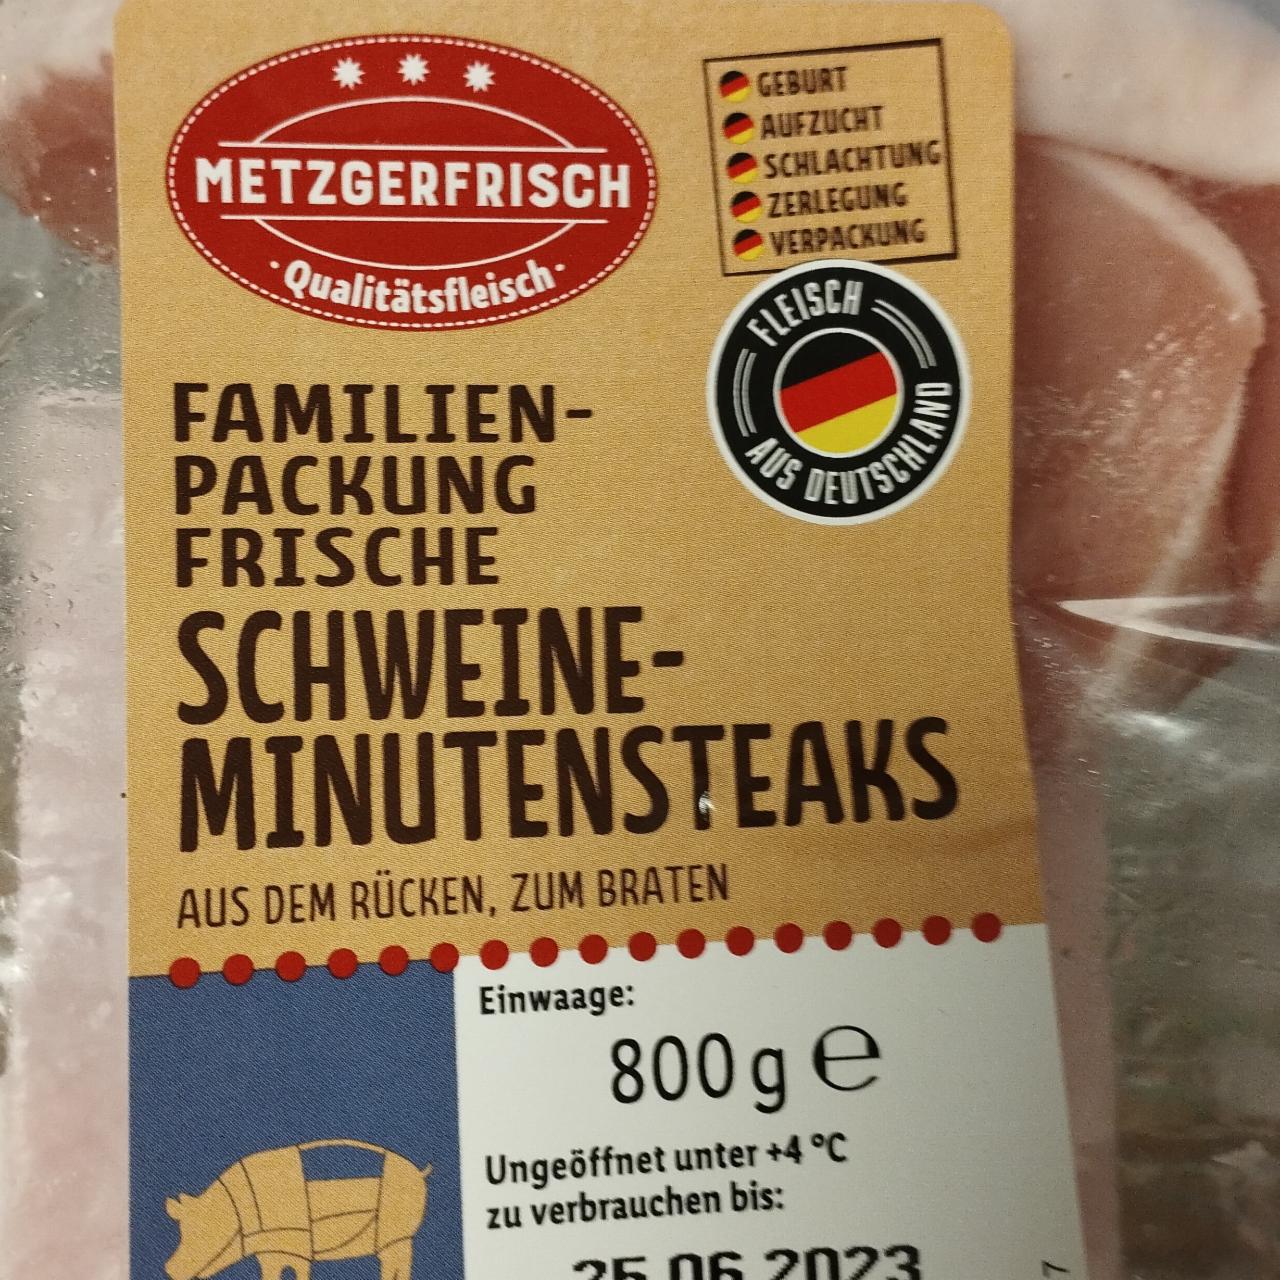 Metzgerfrisch харчова - frische Familien-packung schweine калорійність, minutensteaks цінність ⋙TablycjaKalorijnosti